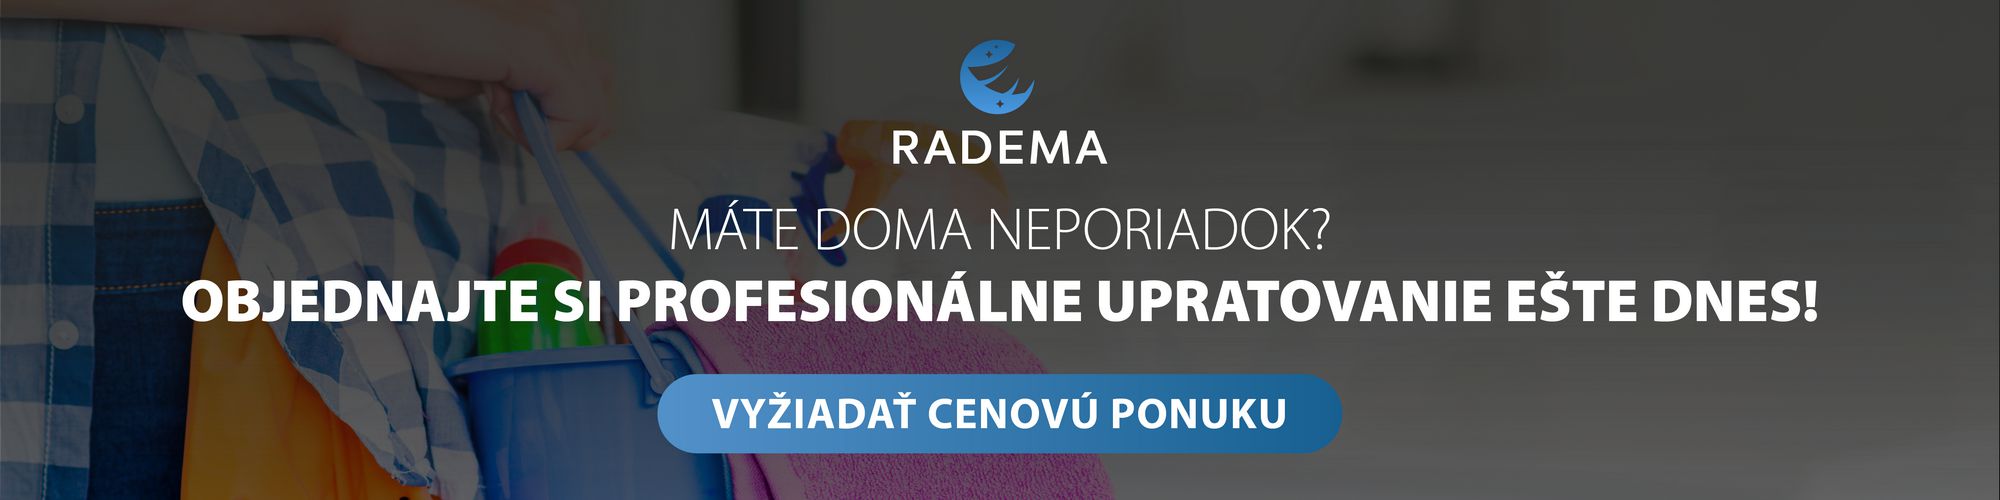 radema-banner_web